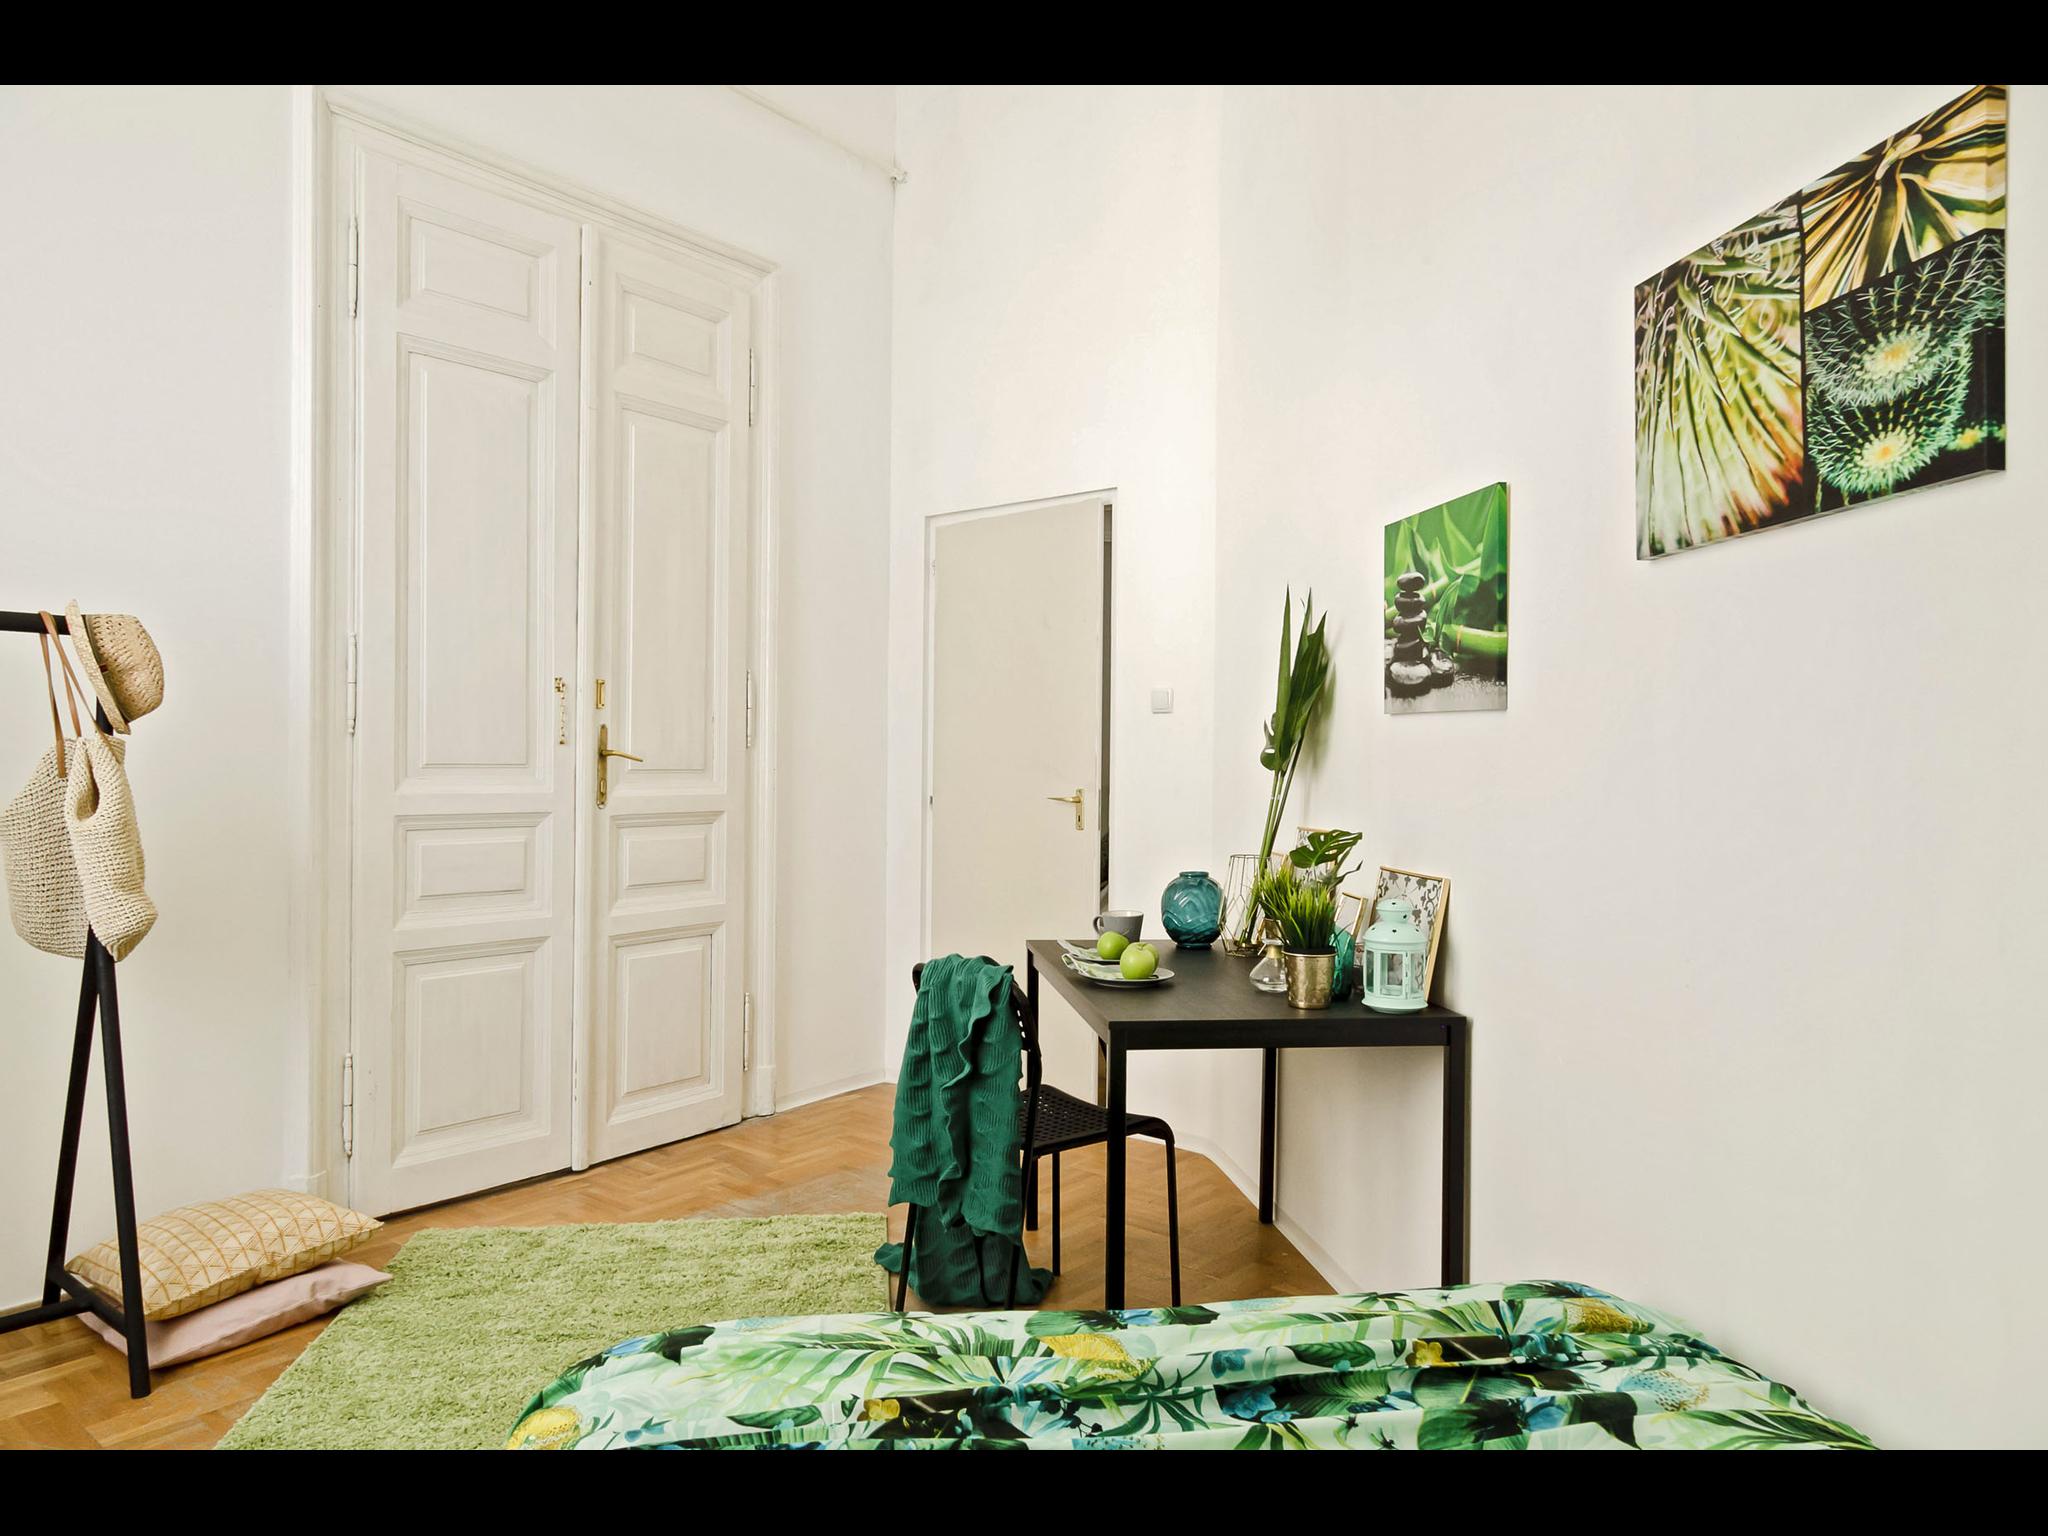 Rakoczi 4 - Bedroom for rent in Budapest